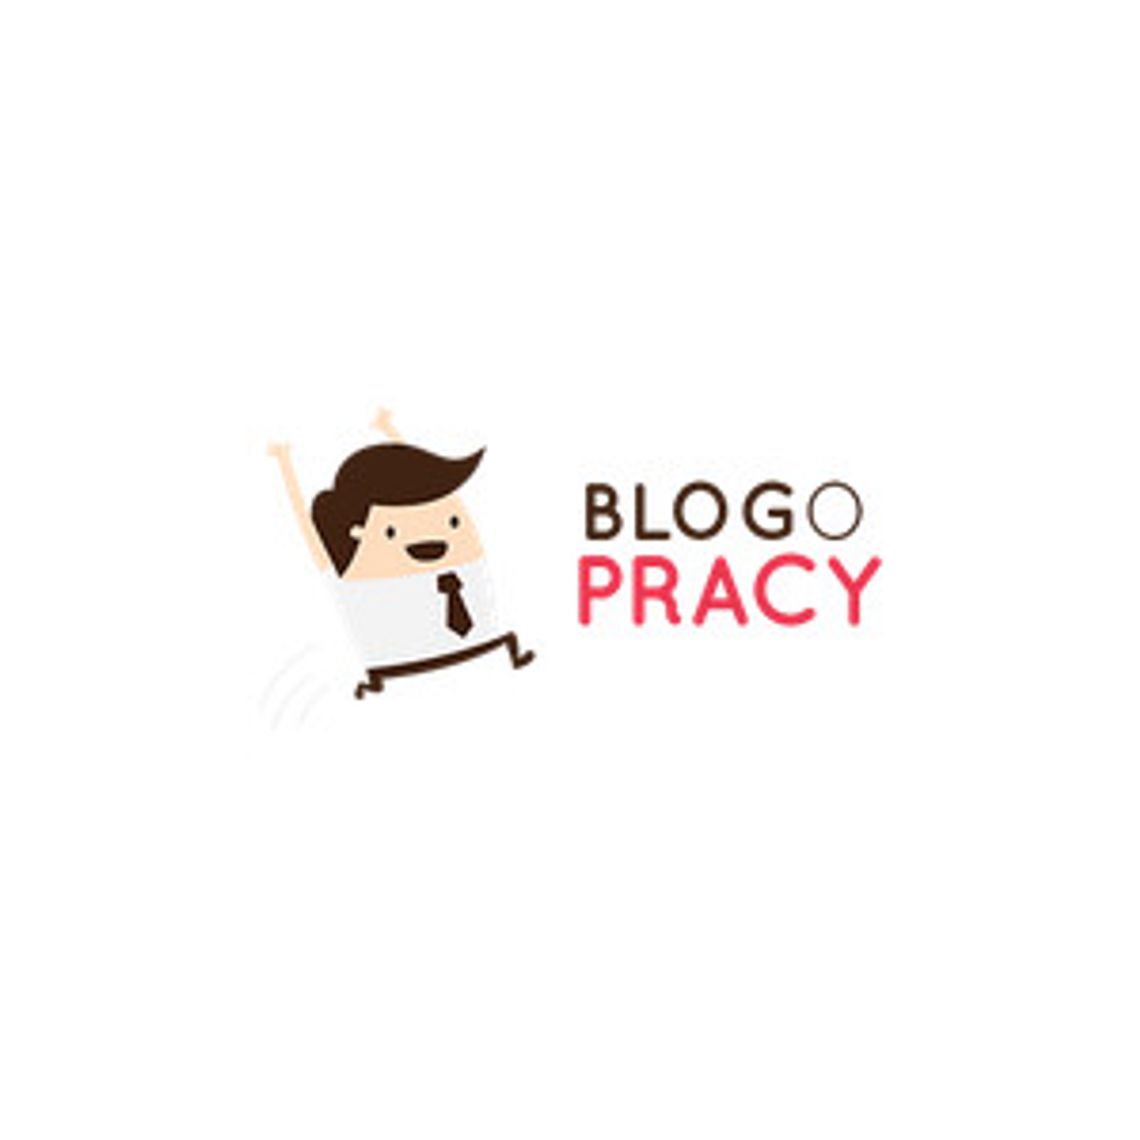 Blogopracy